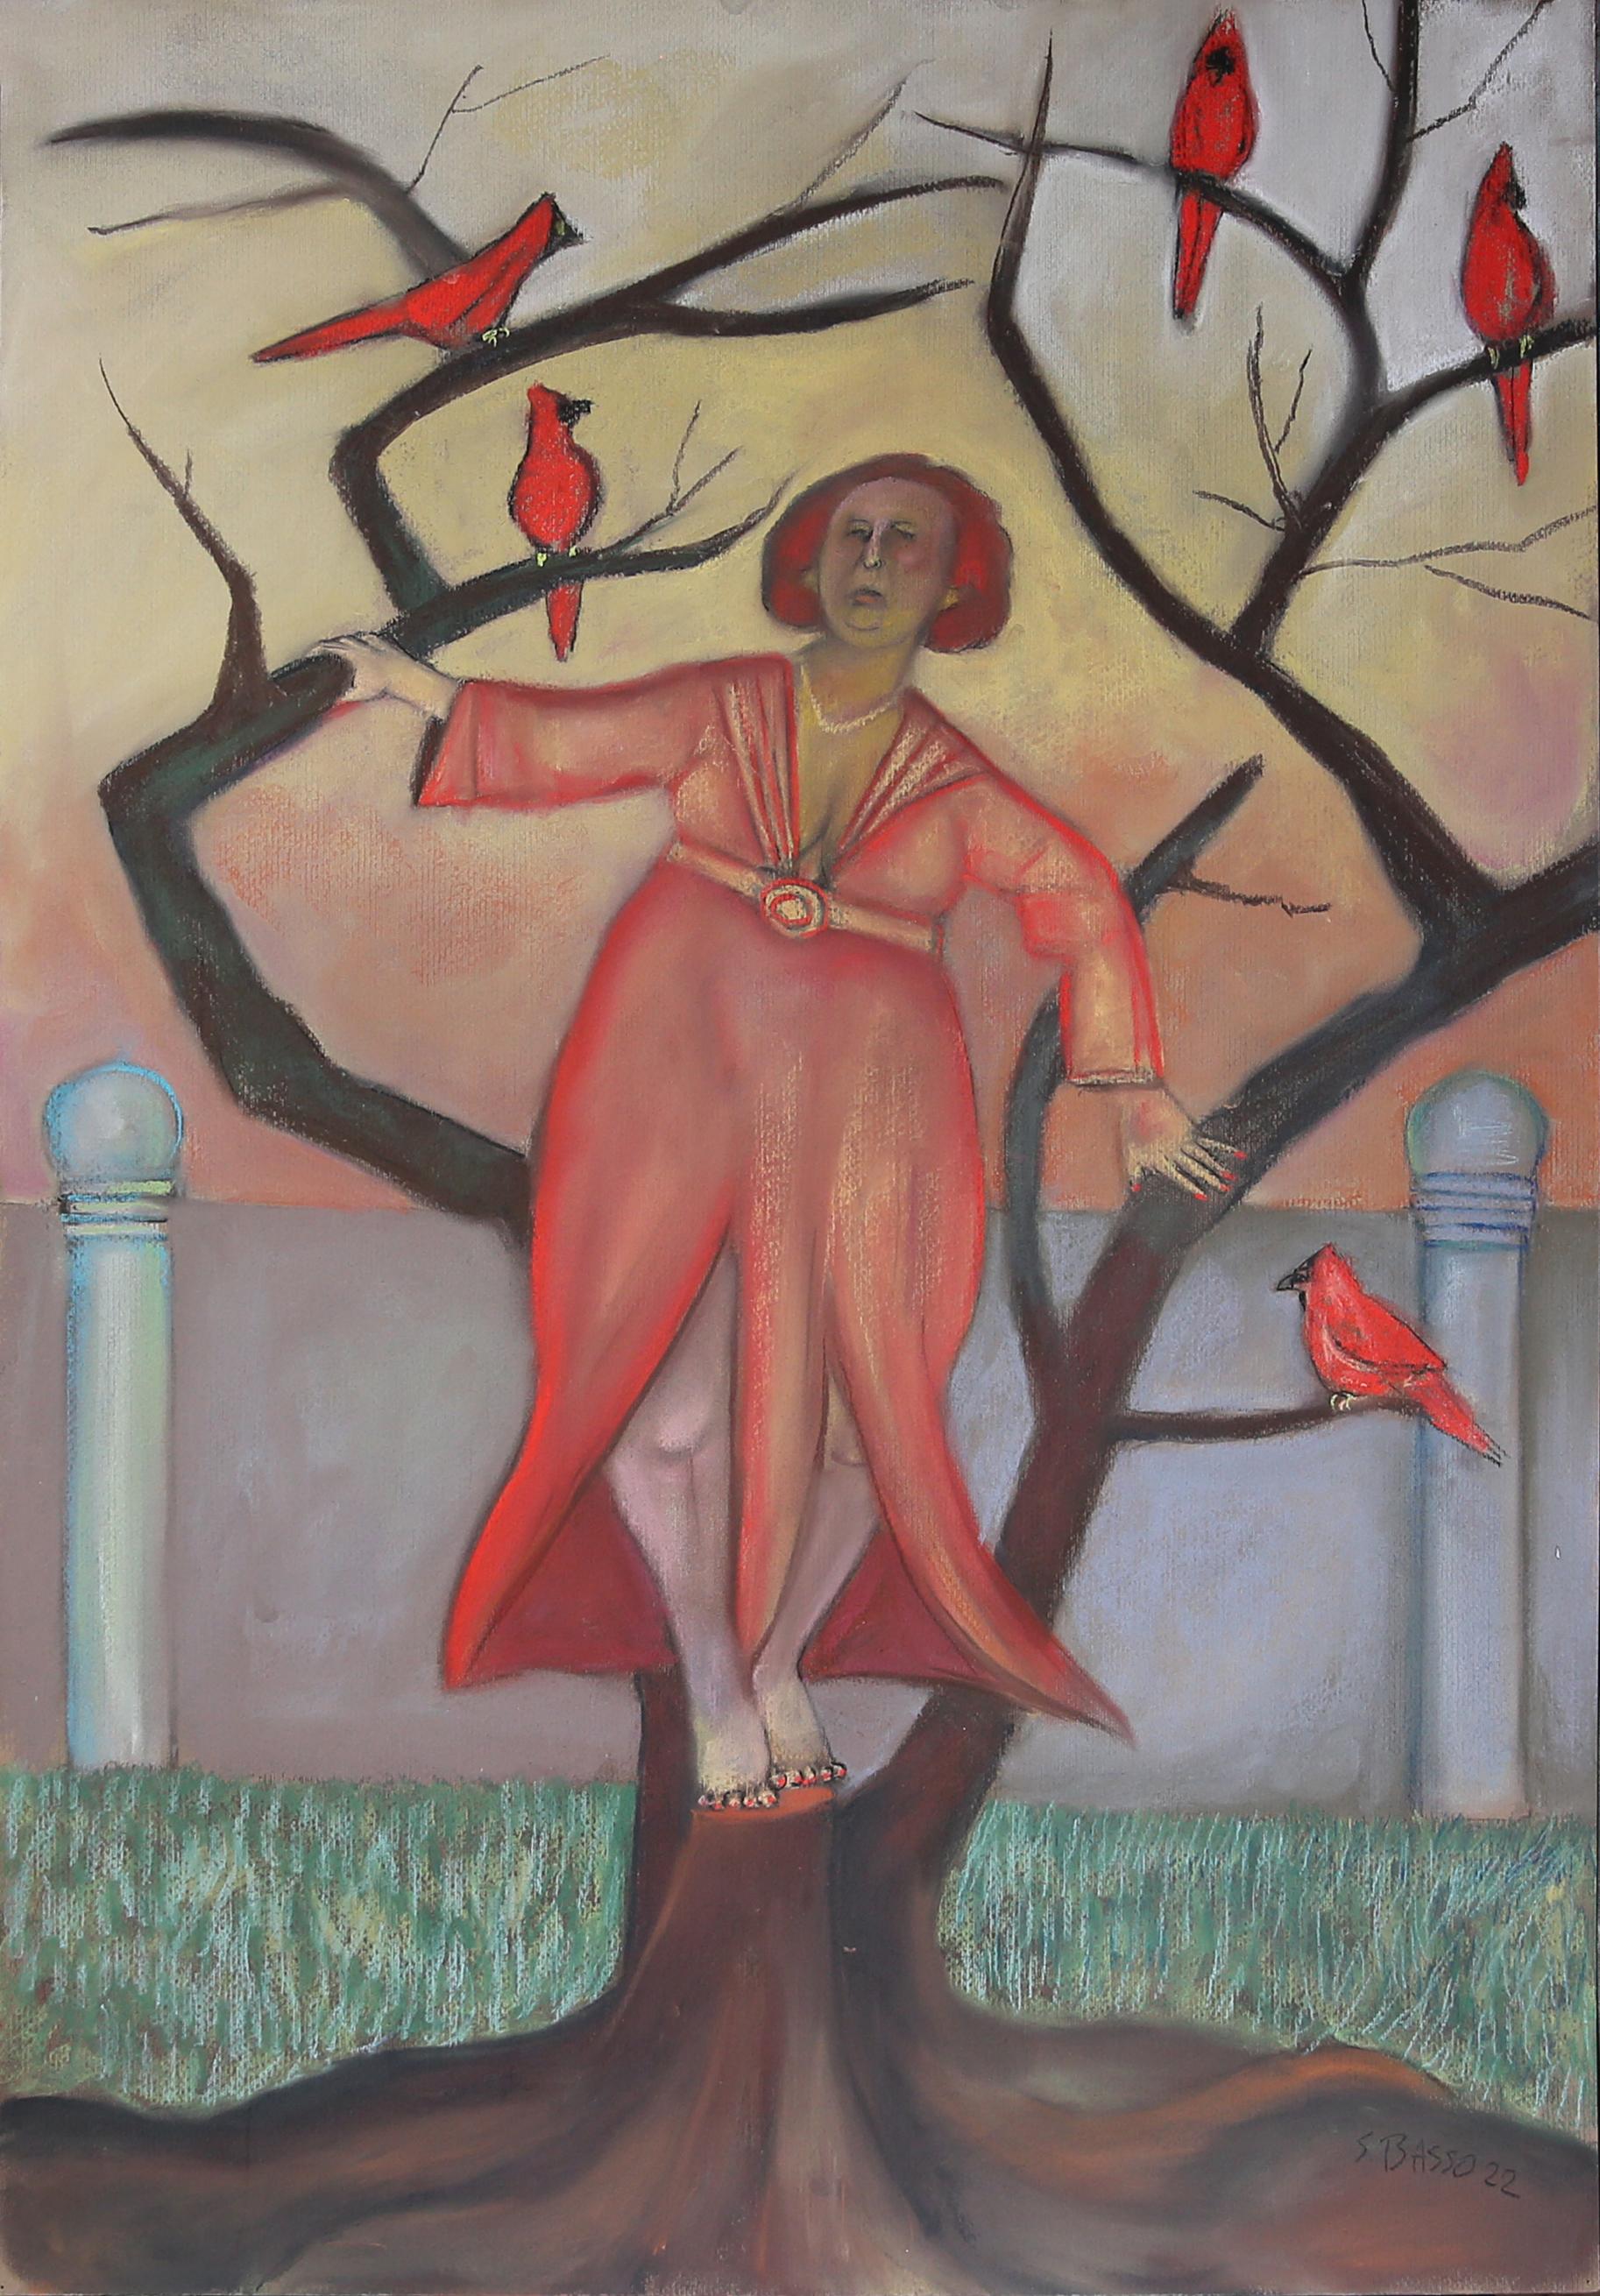 Stephen Basso Figurative Art - Cardinal Rule surreal mythological narrative birds tree autumn color humor